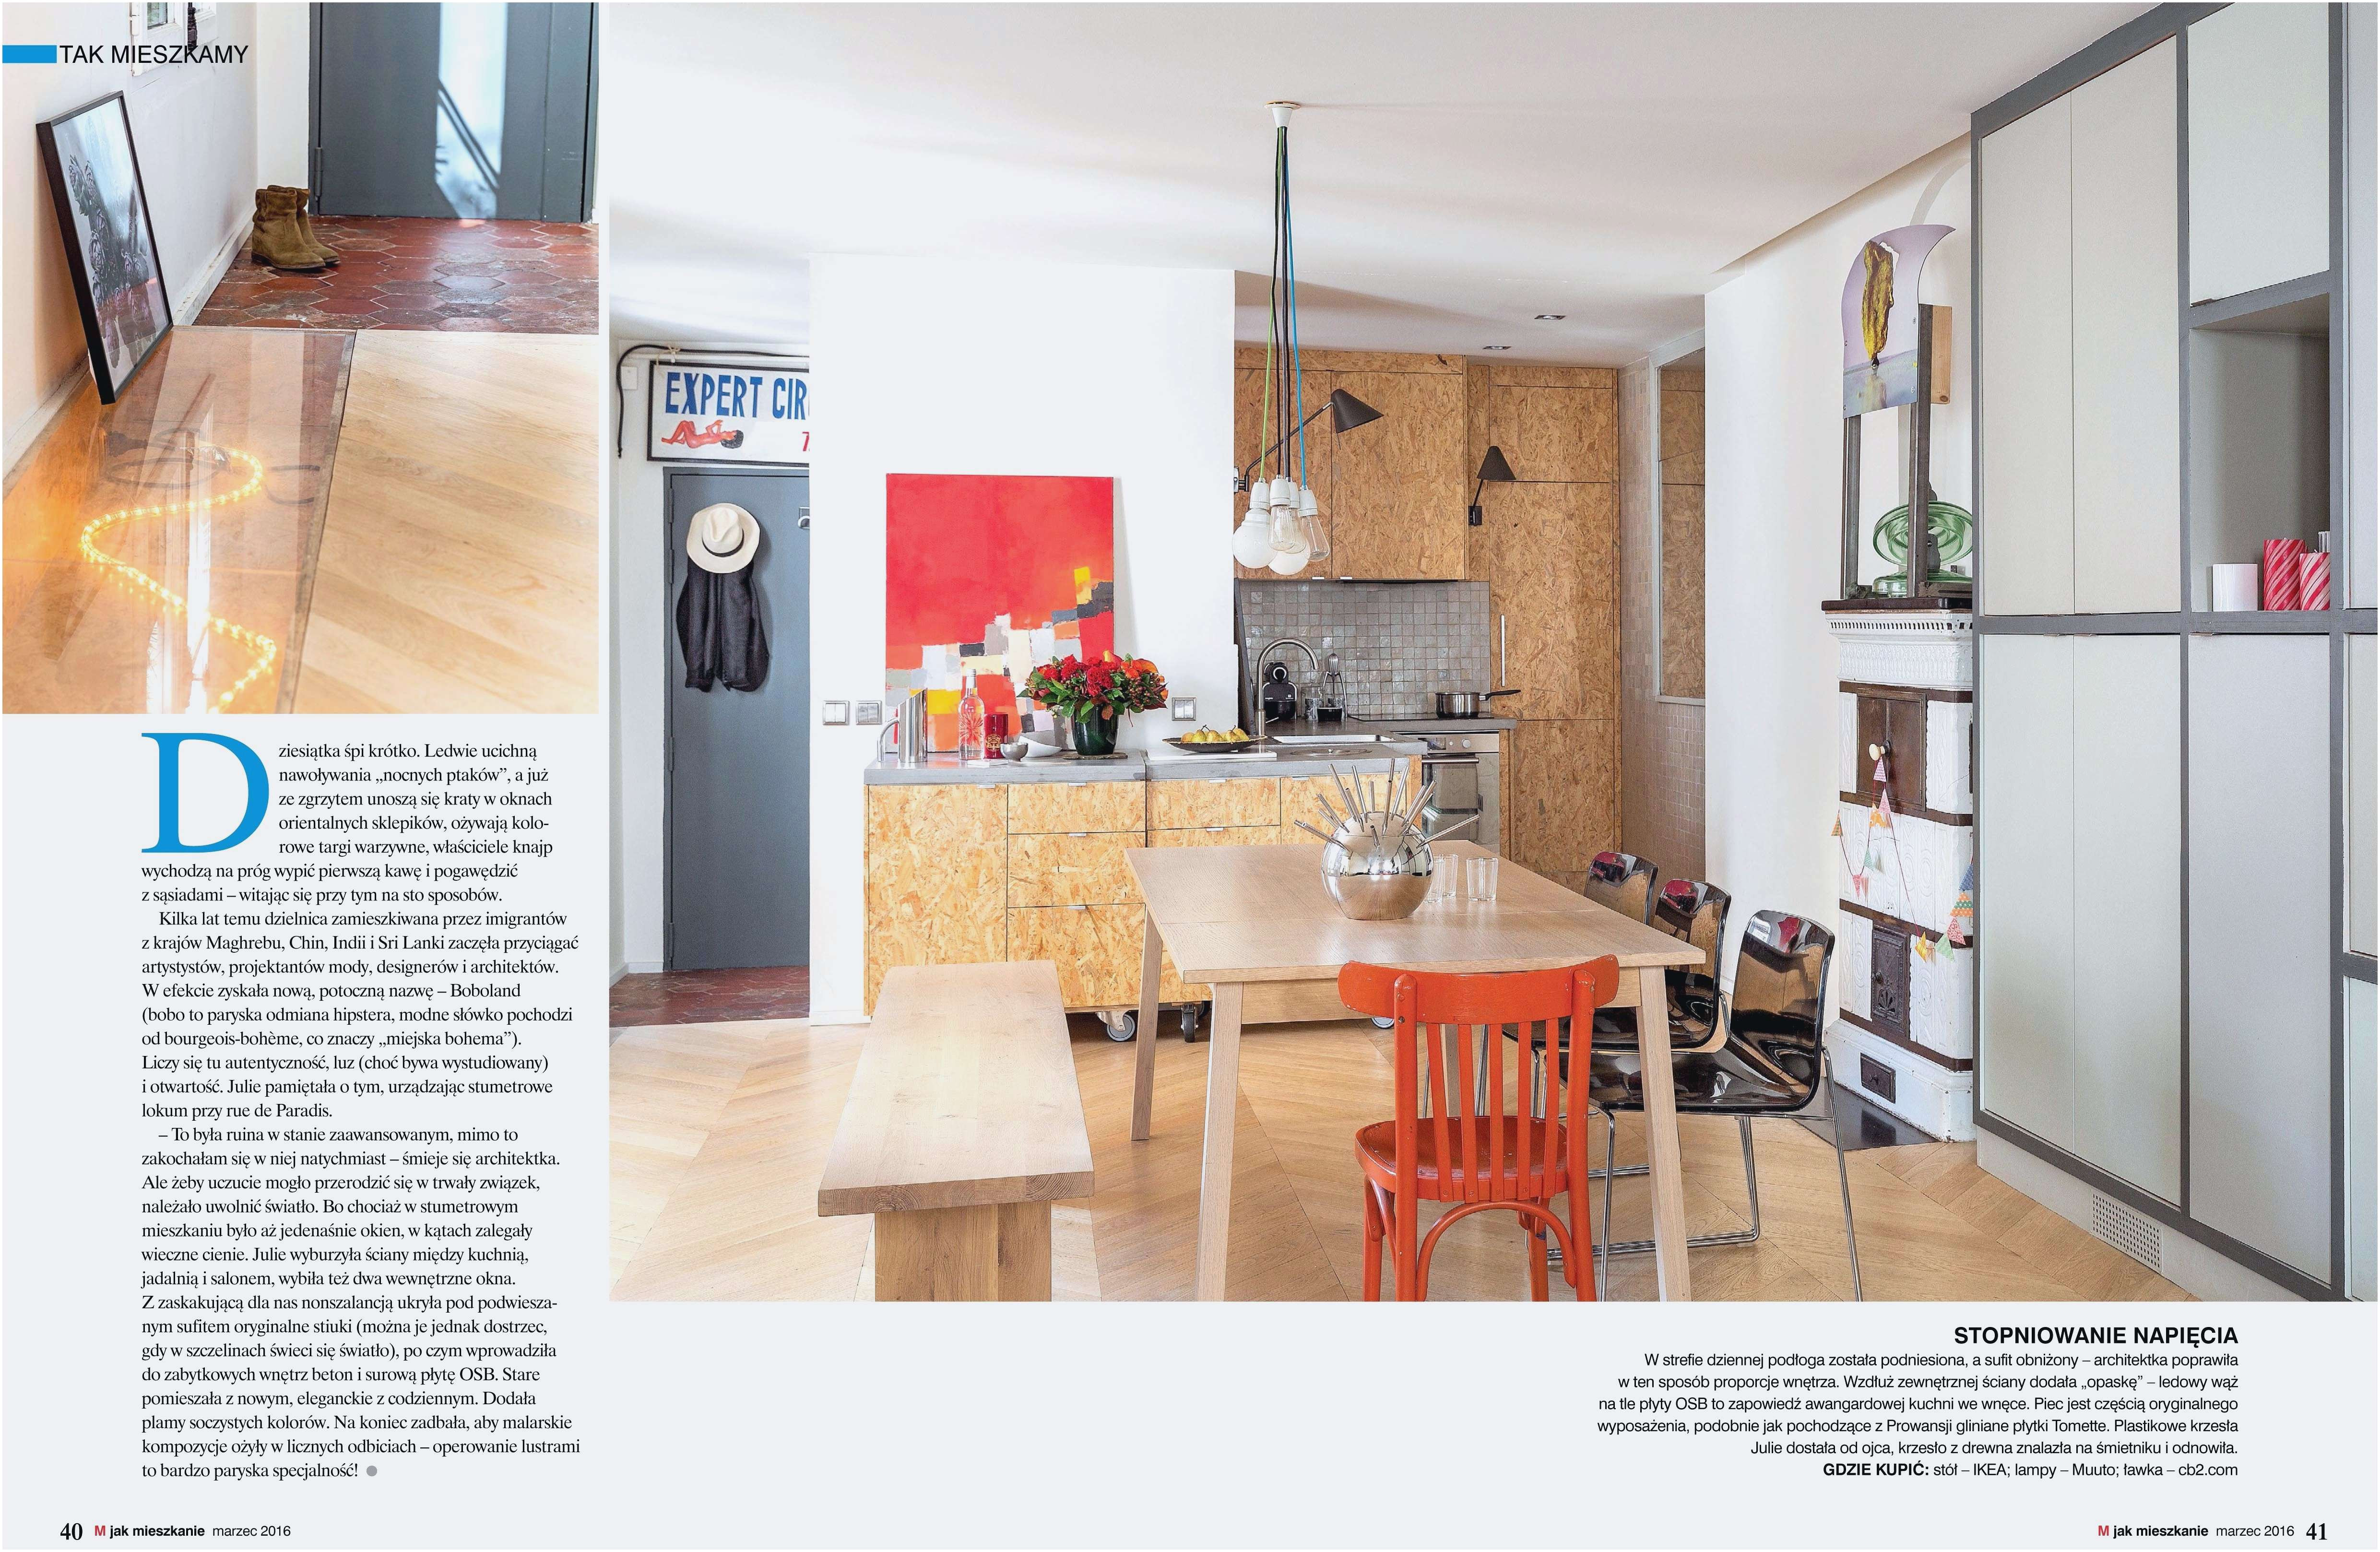 inspire 20 luxury ikea kitchen design software uk kitchen design ideas pour meilleur ikea home planner